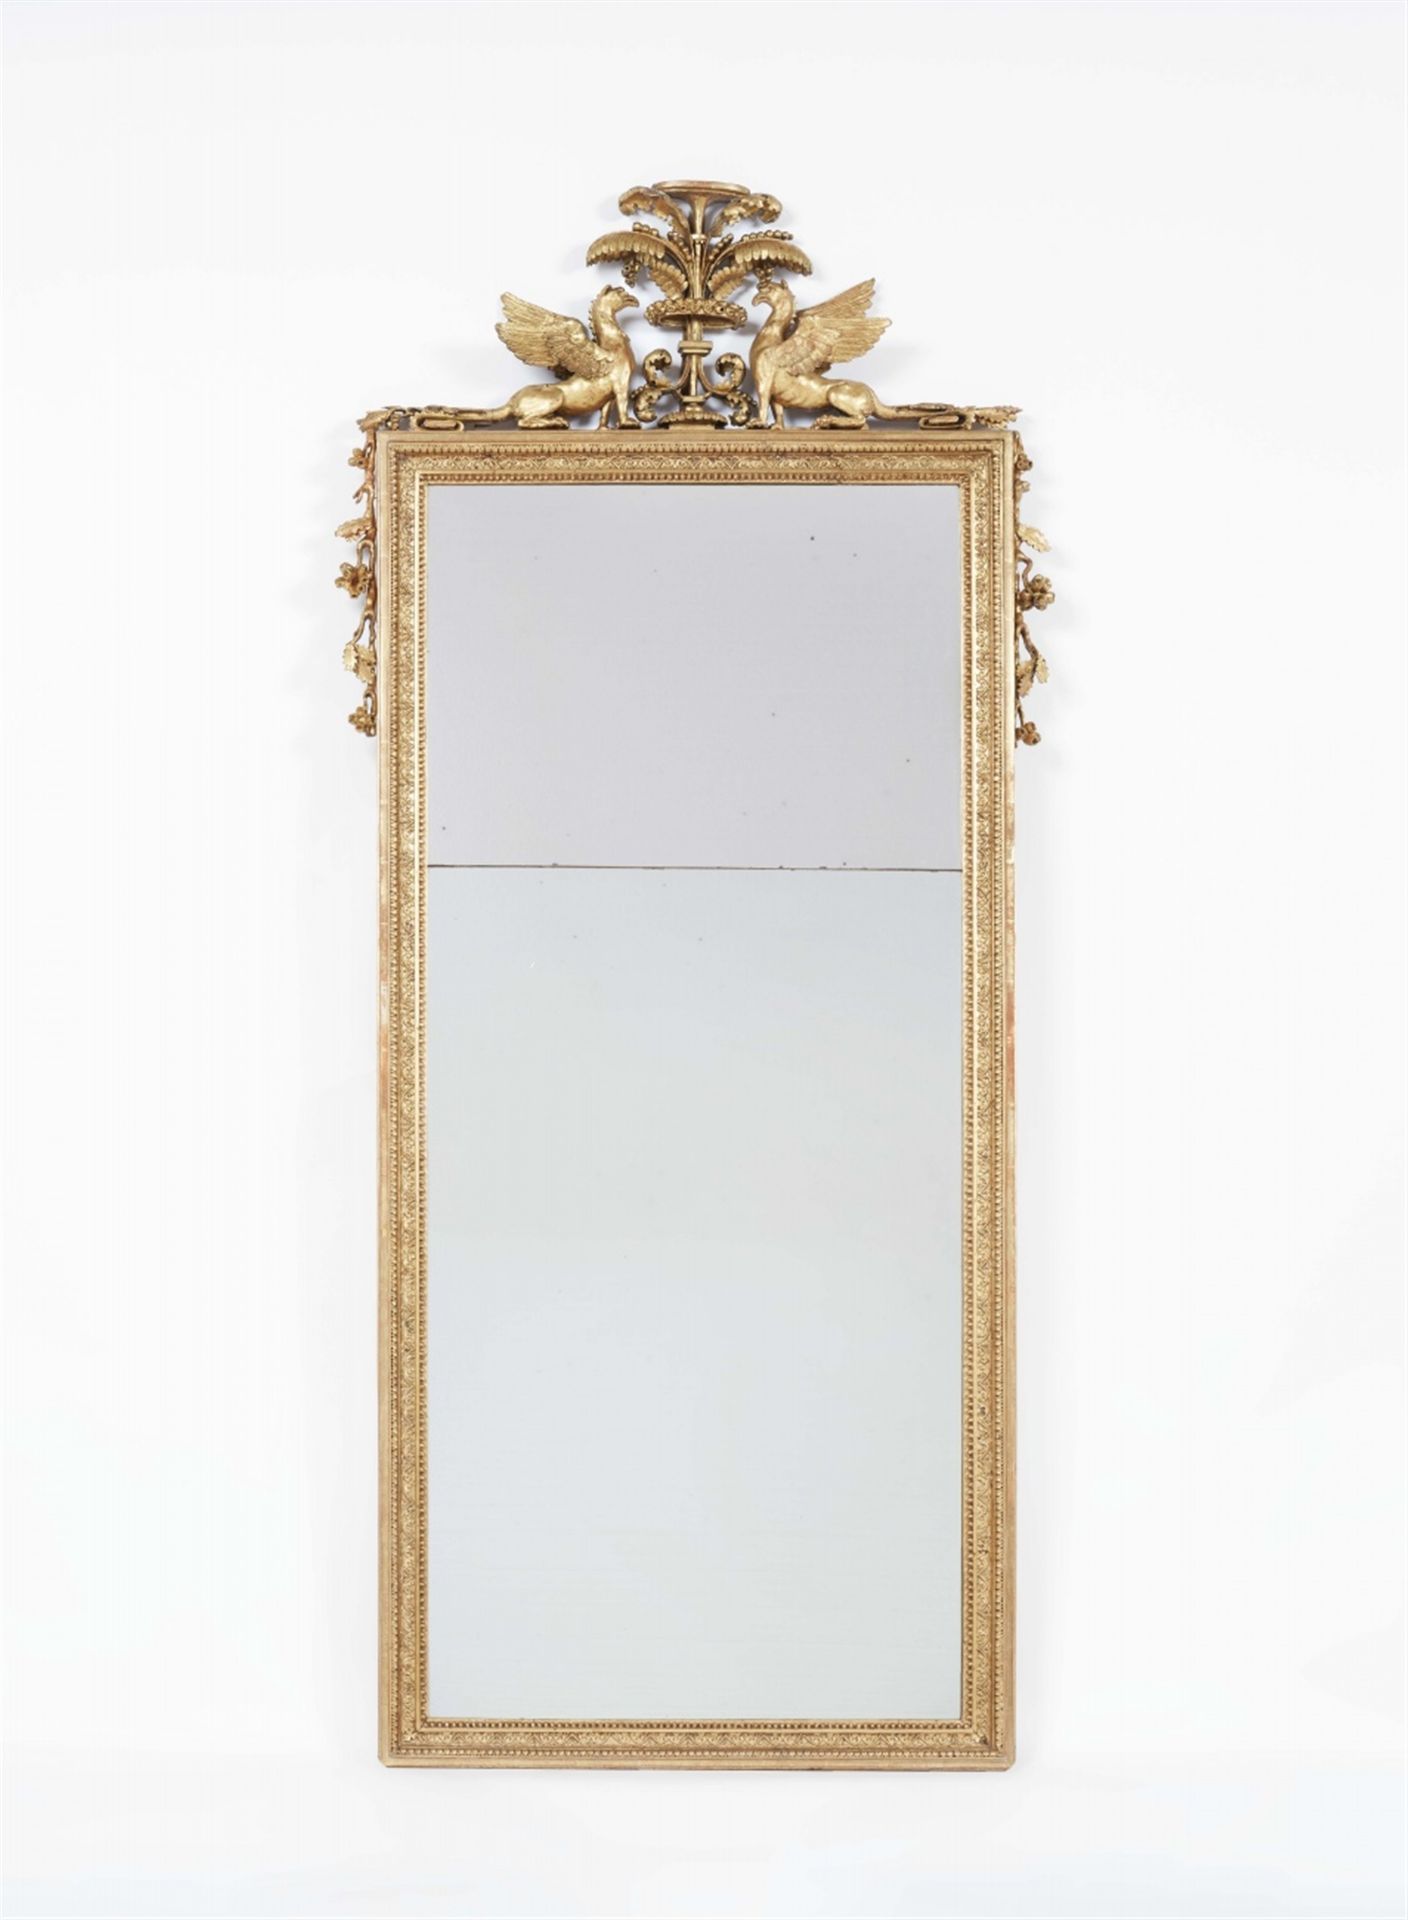 A Neoclassical English mirror